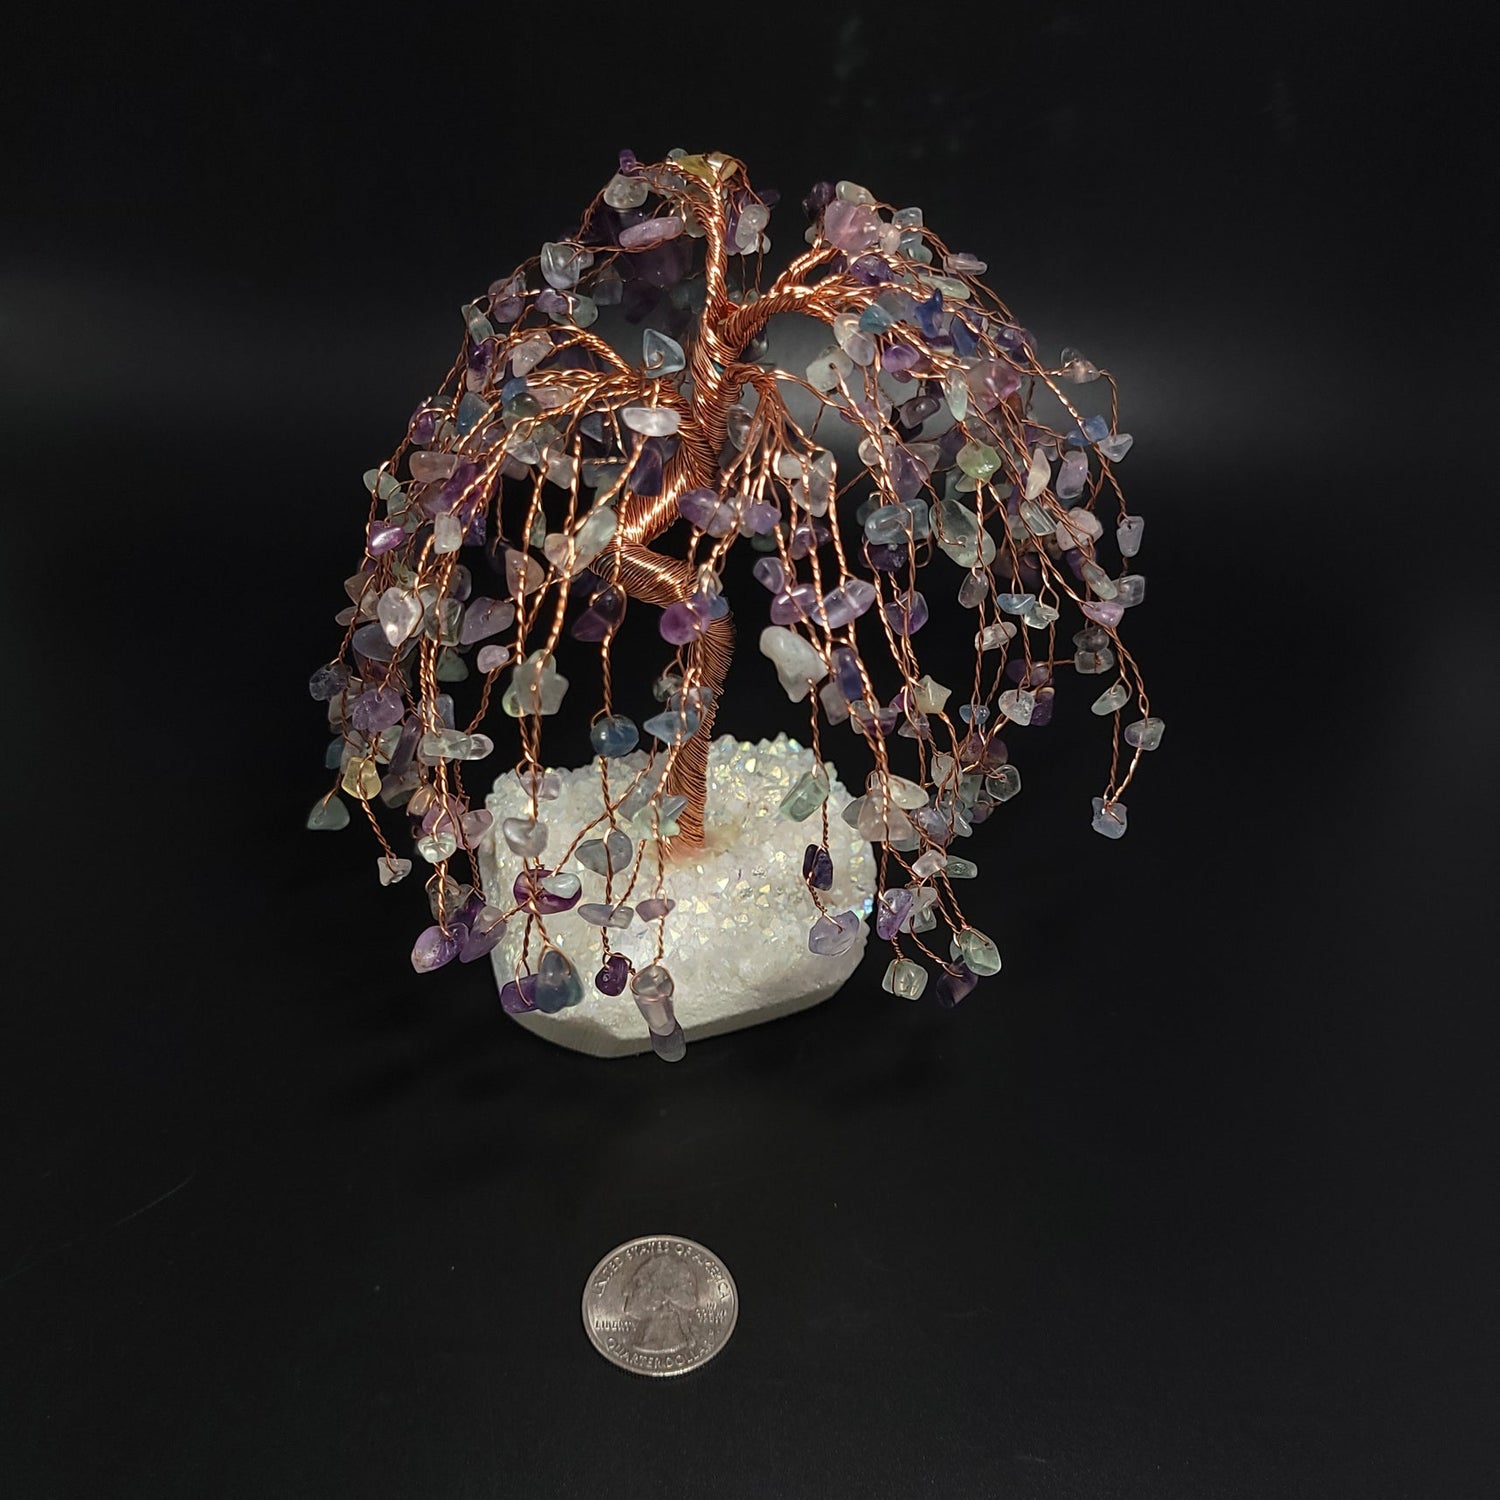 Fluorite & Aura Quartz Willow Tree Gemstone Tree - Elevated Metaphysical